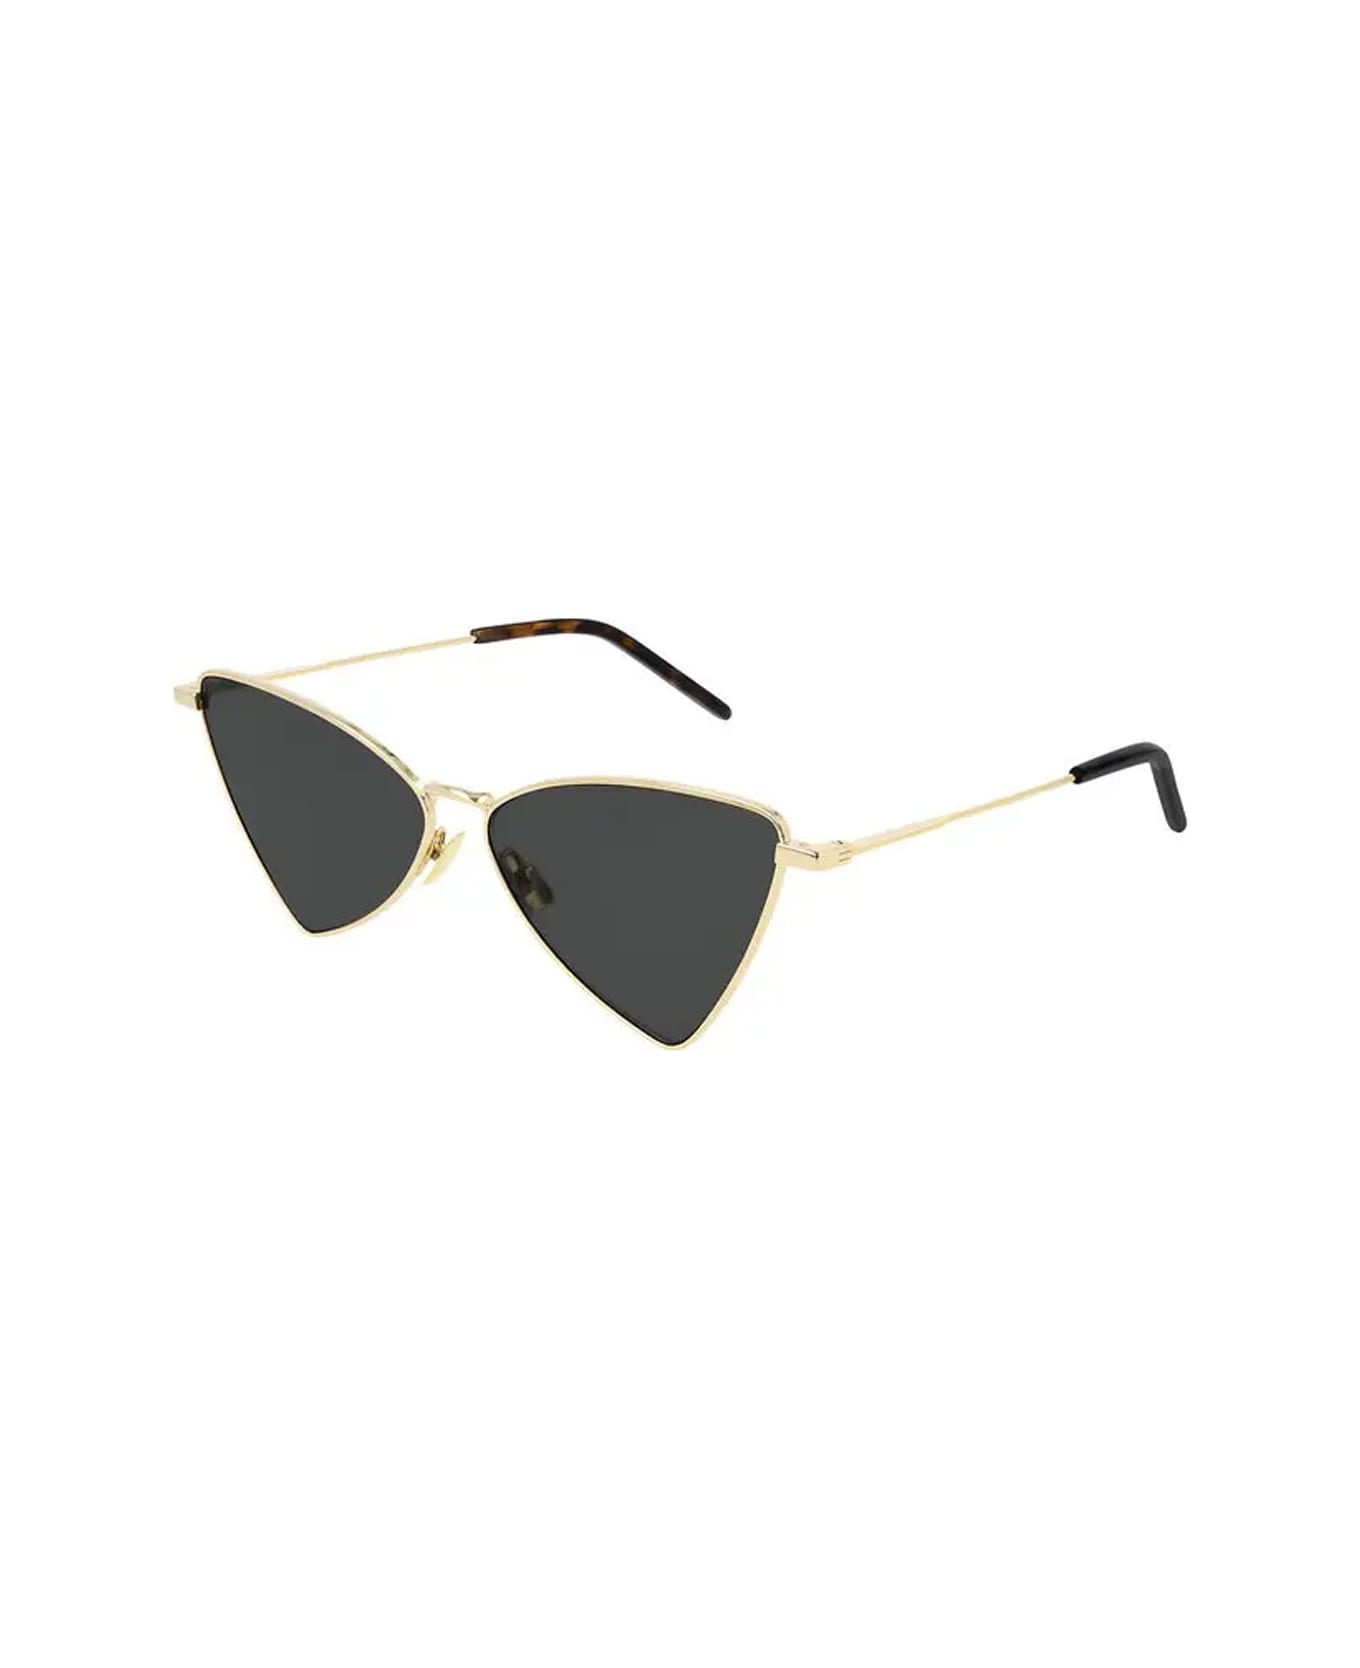 Saint Laurent Eyewear Sl 303 004 Sunglasses - Oro